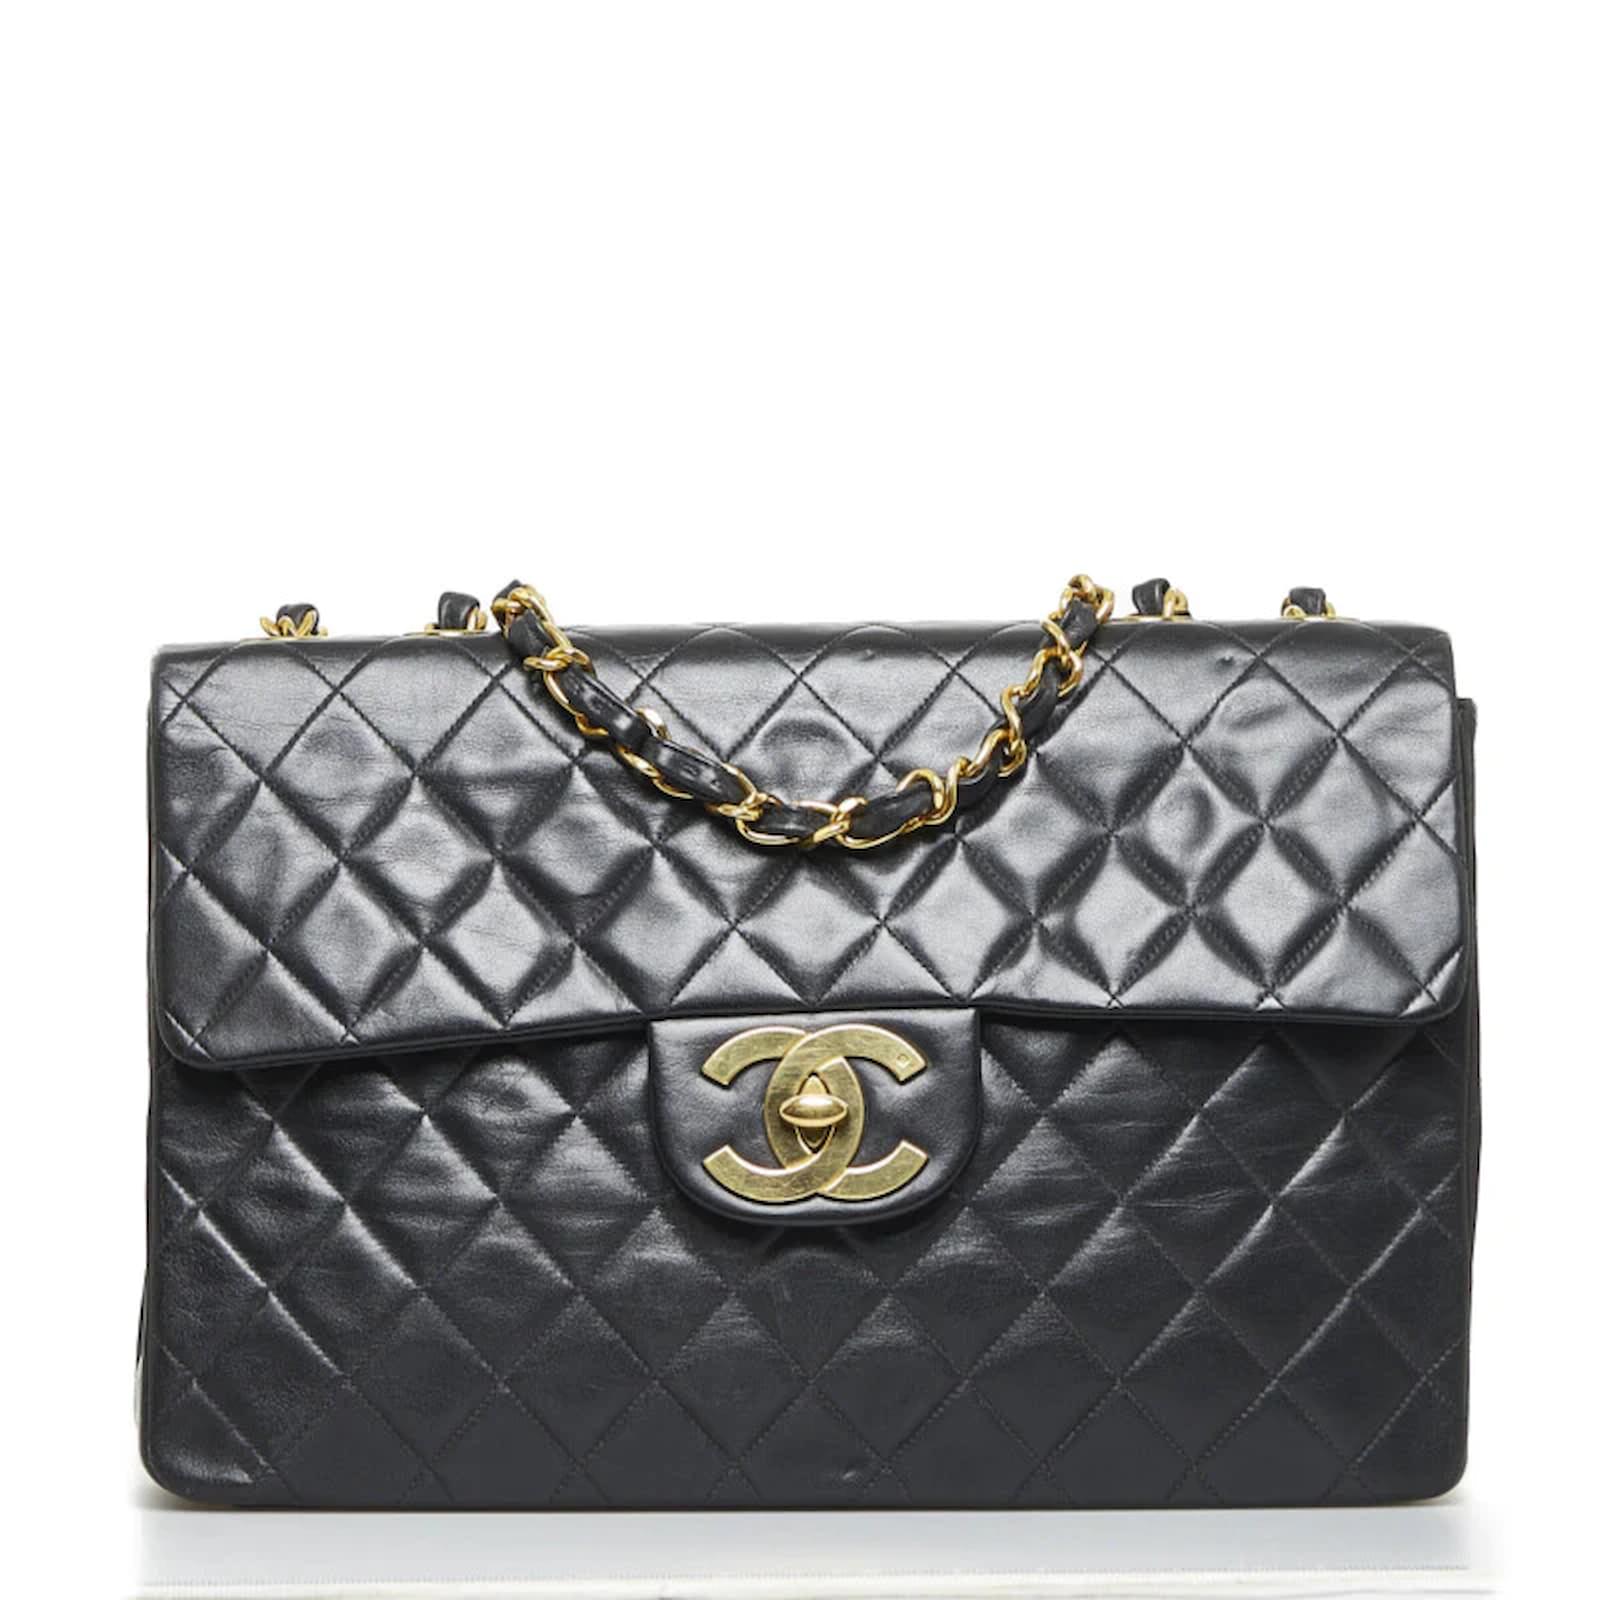 Chanel Maxi Classic Single Flap Bag Black Leather Pony-style